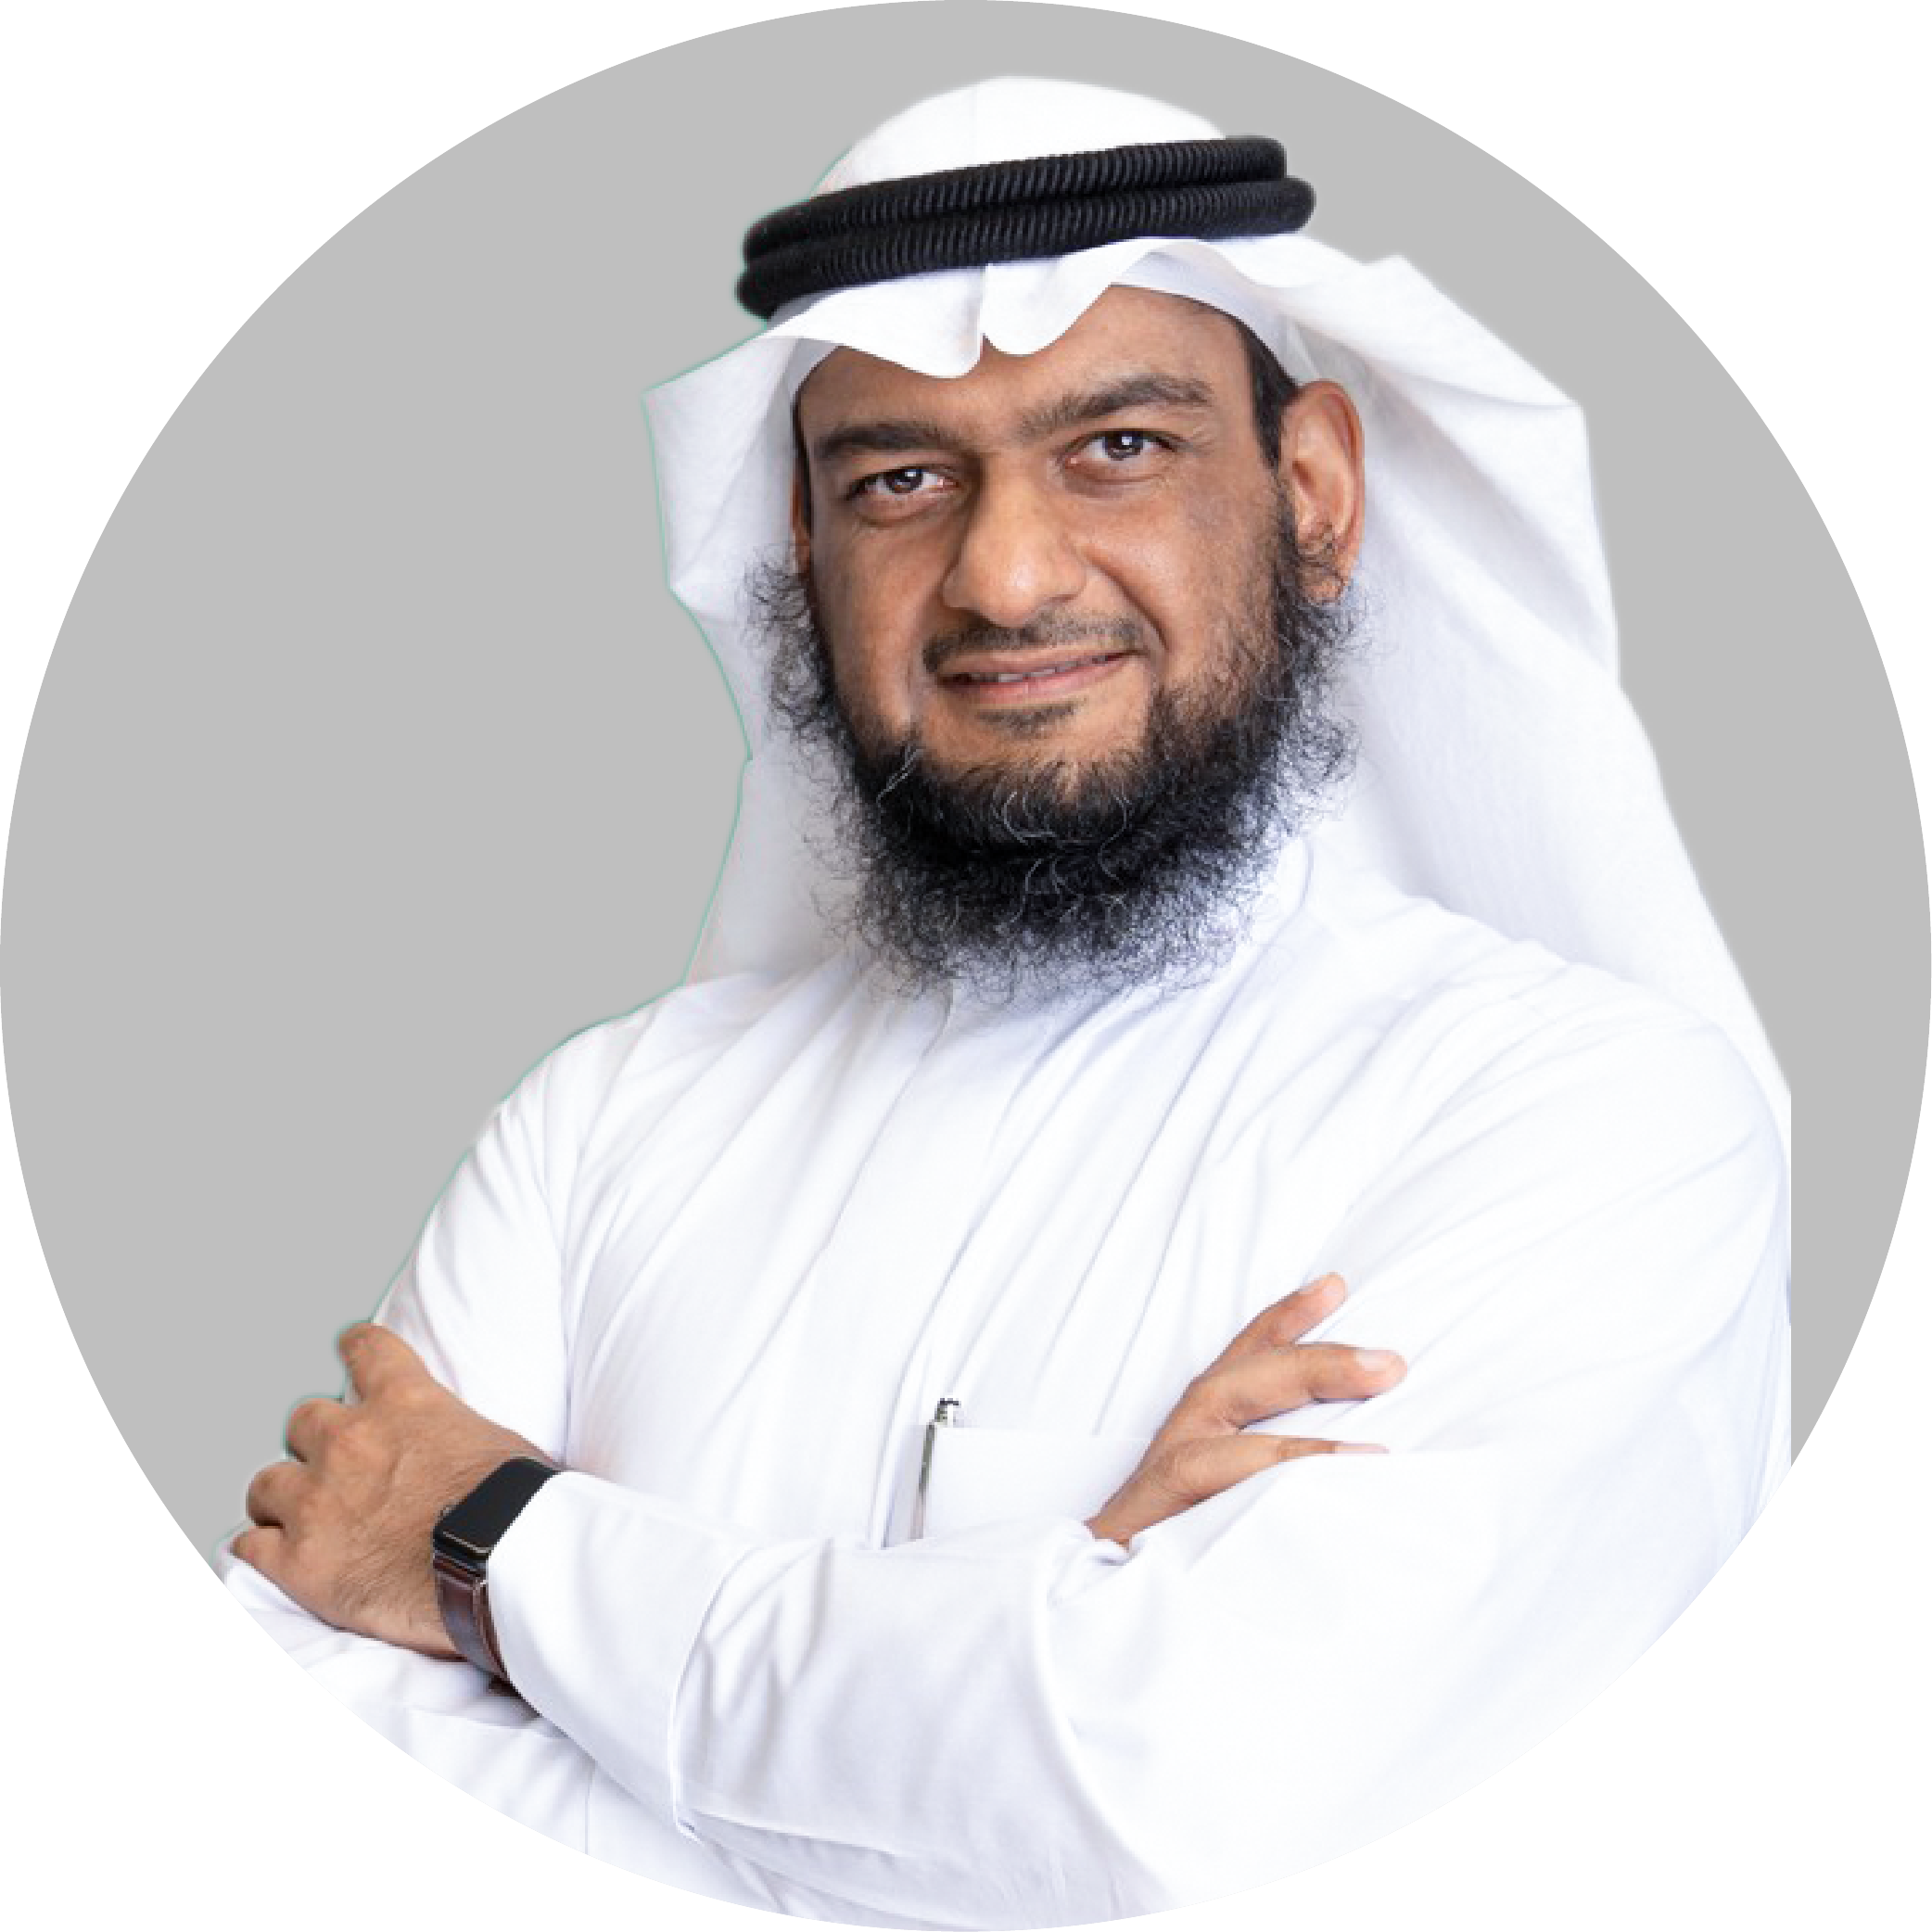 Mr. Rashid bin Mohammed Al-Jalajel